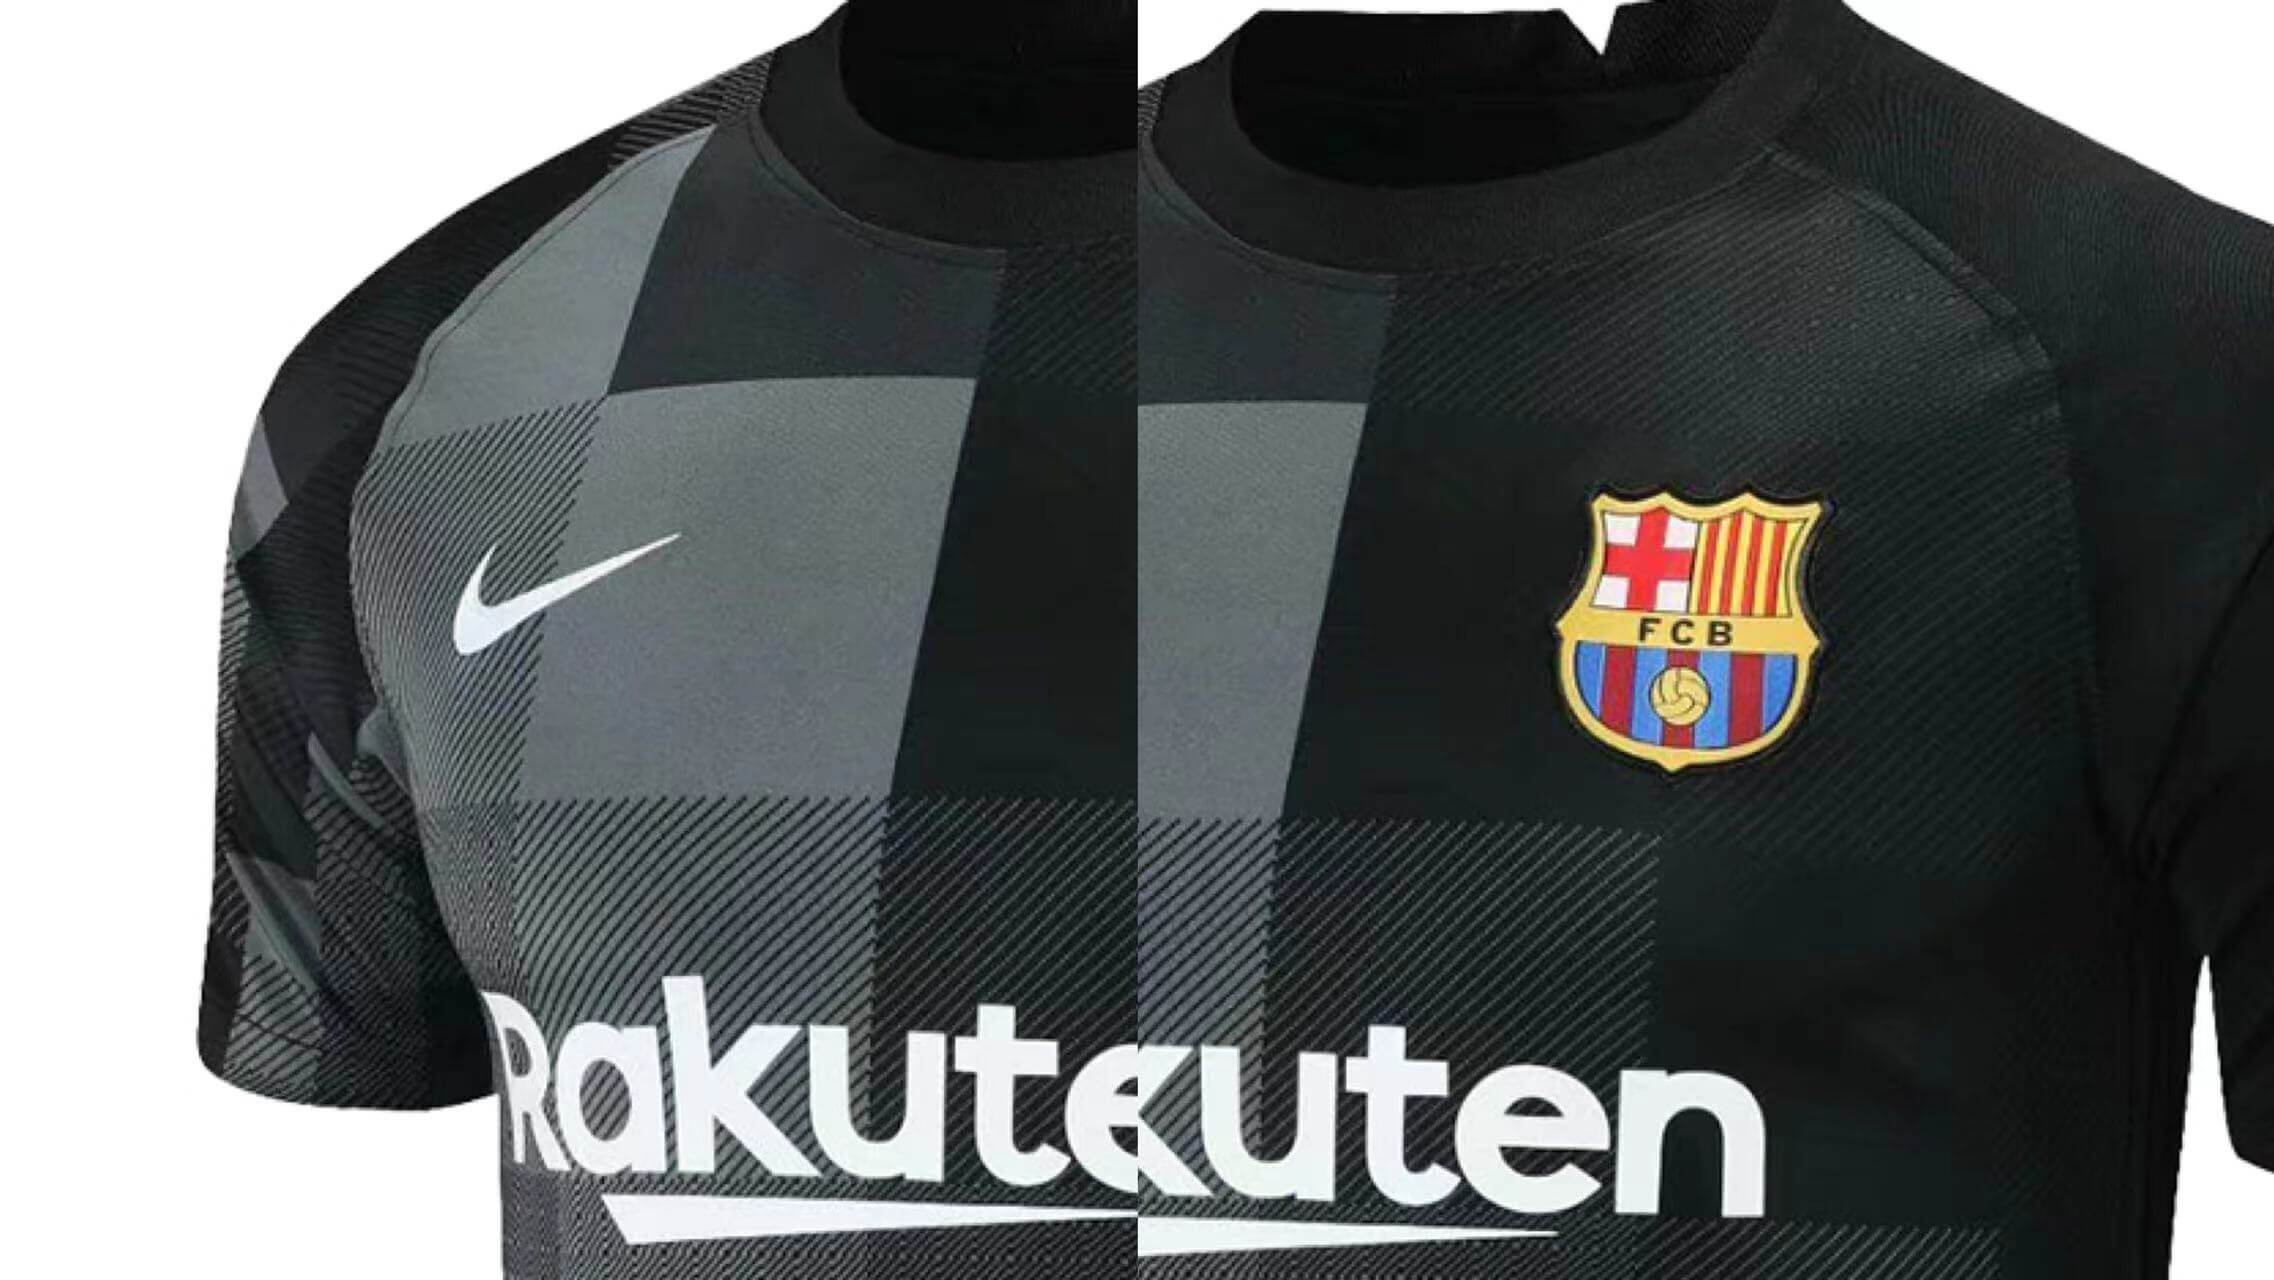 Barcelona fc jersey